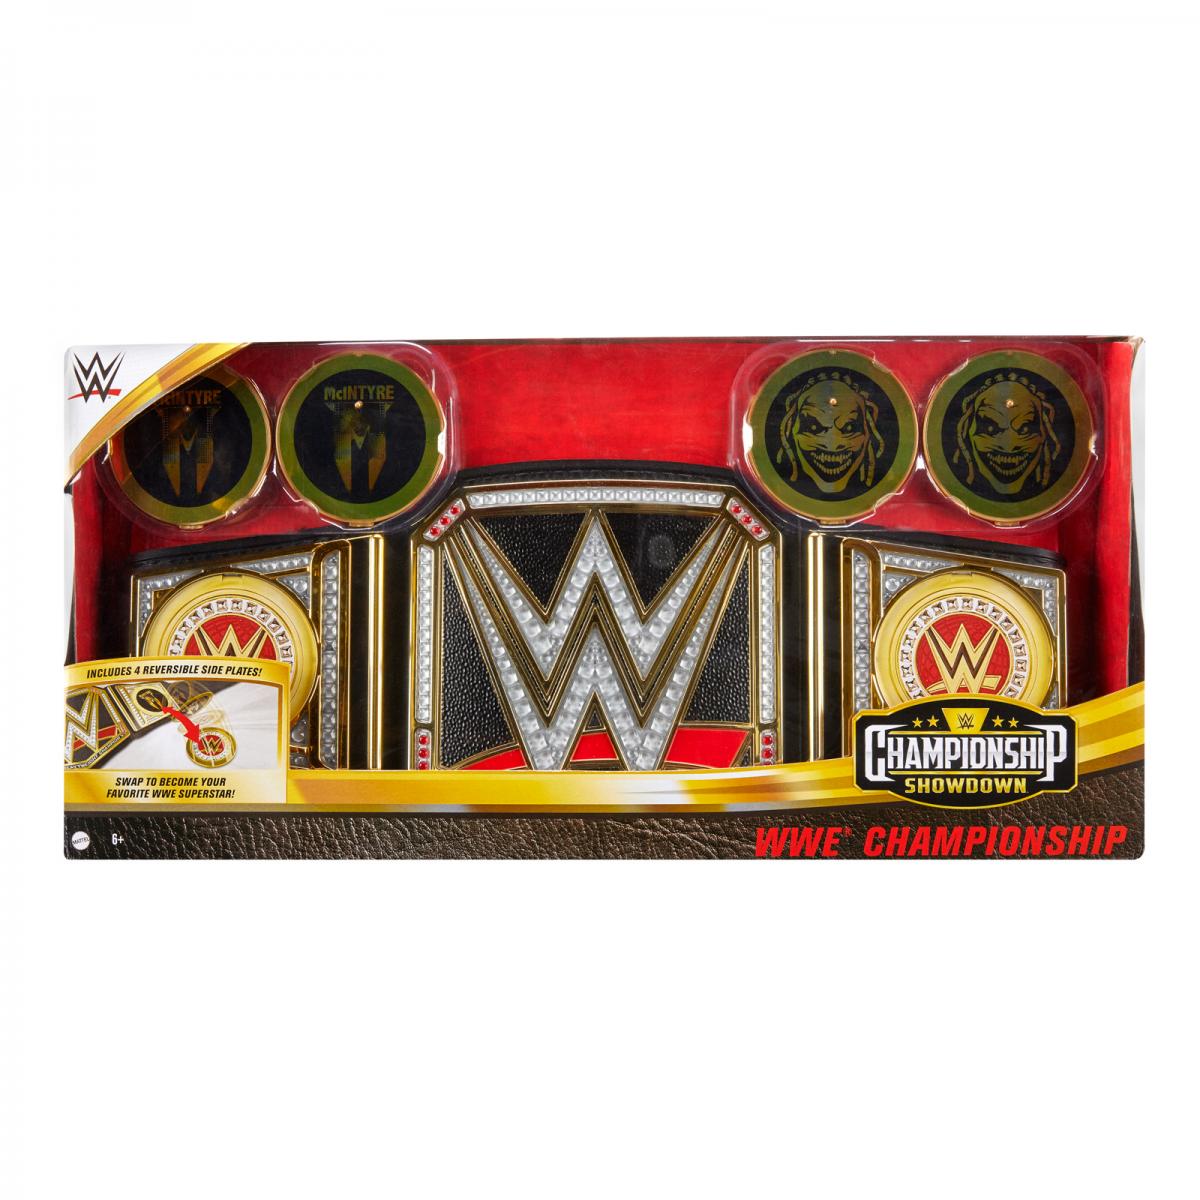 2020 WWE Mattel Basic Championship Showdown WWE Championship Showdown Deluxe Championship Title